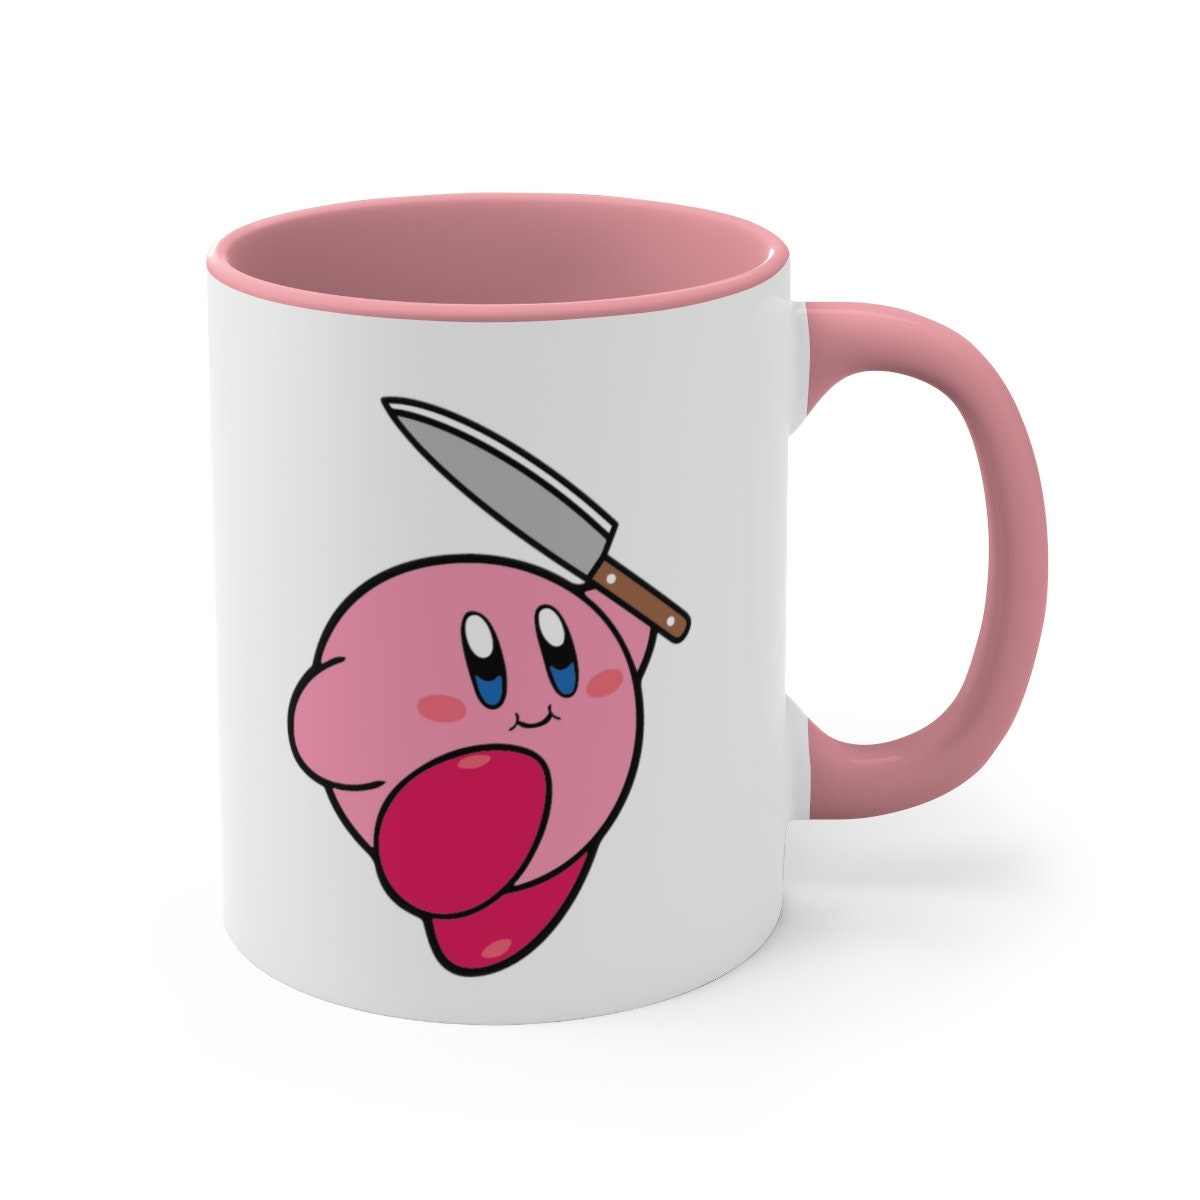 SoKawaii - This glossy Kirby mug is what we need to make our